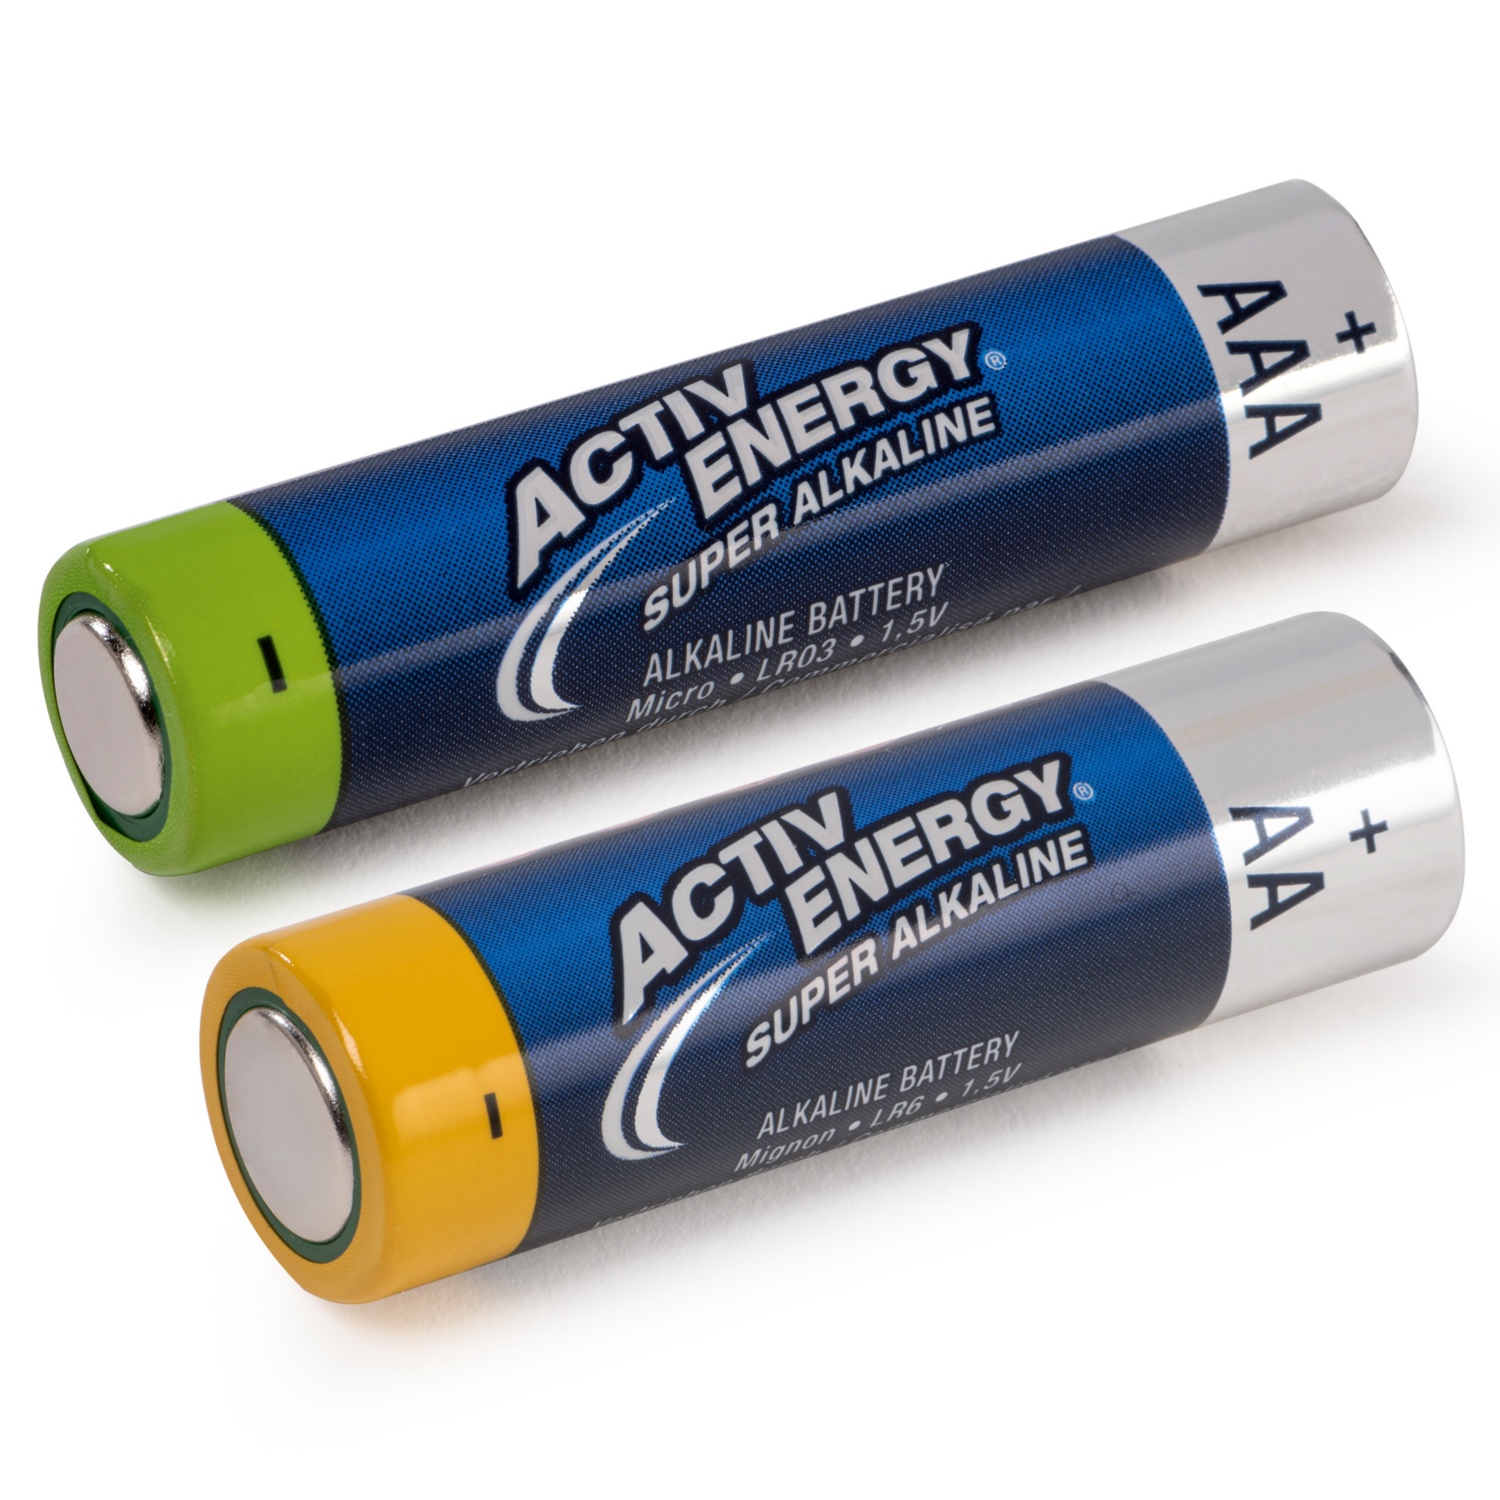 ACTIV ENERGY Batterie formato «Big box»